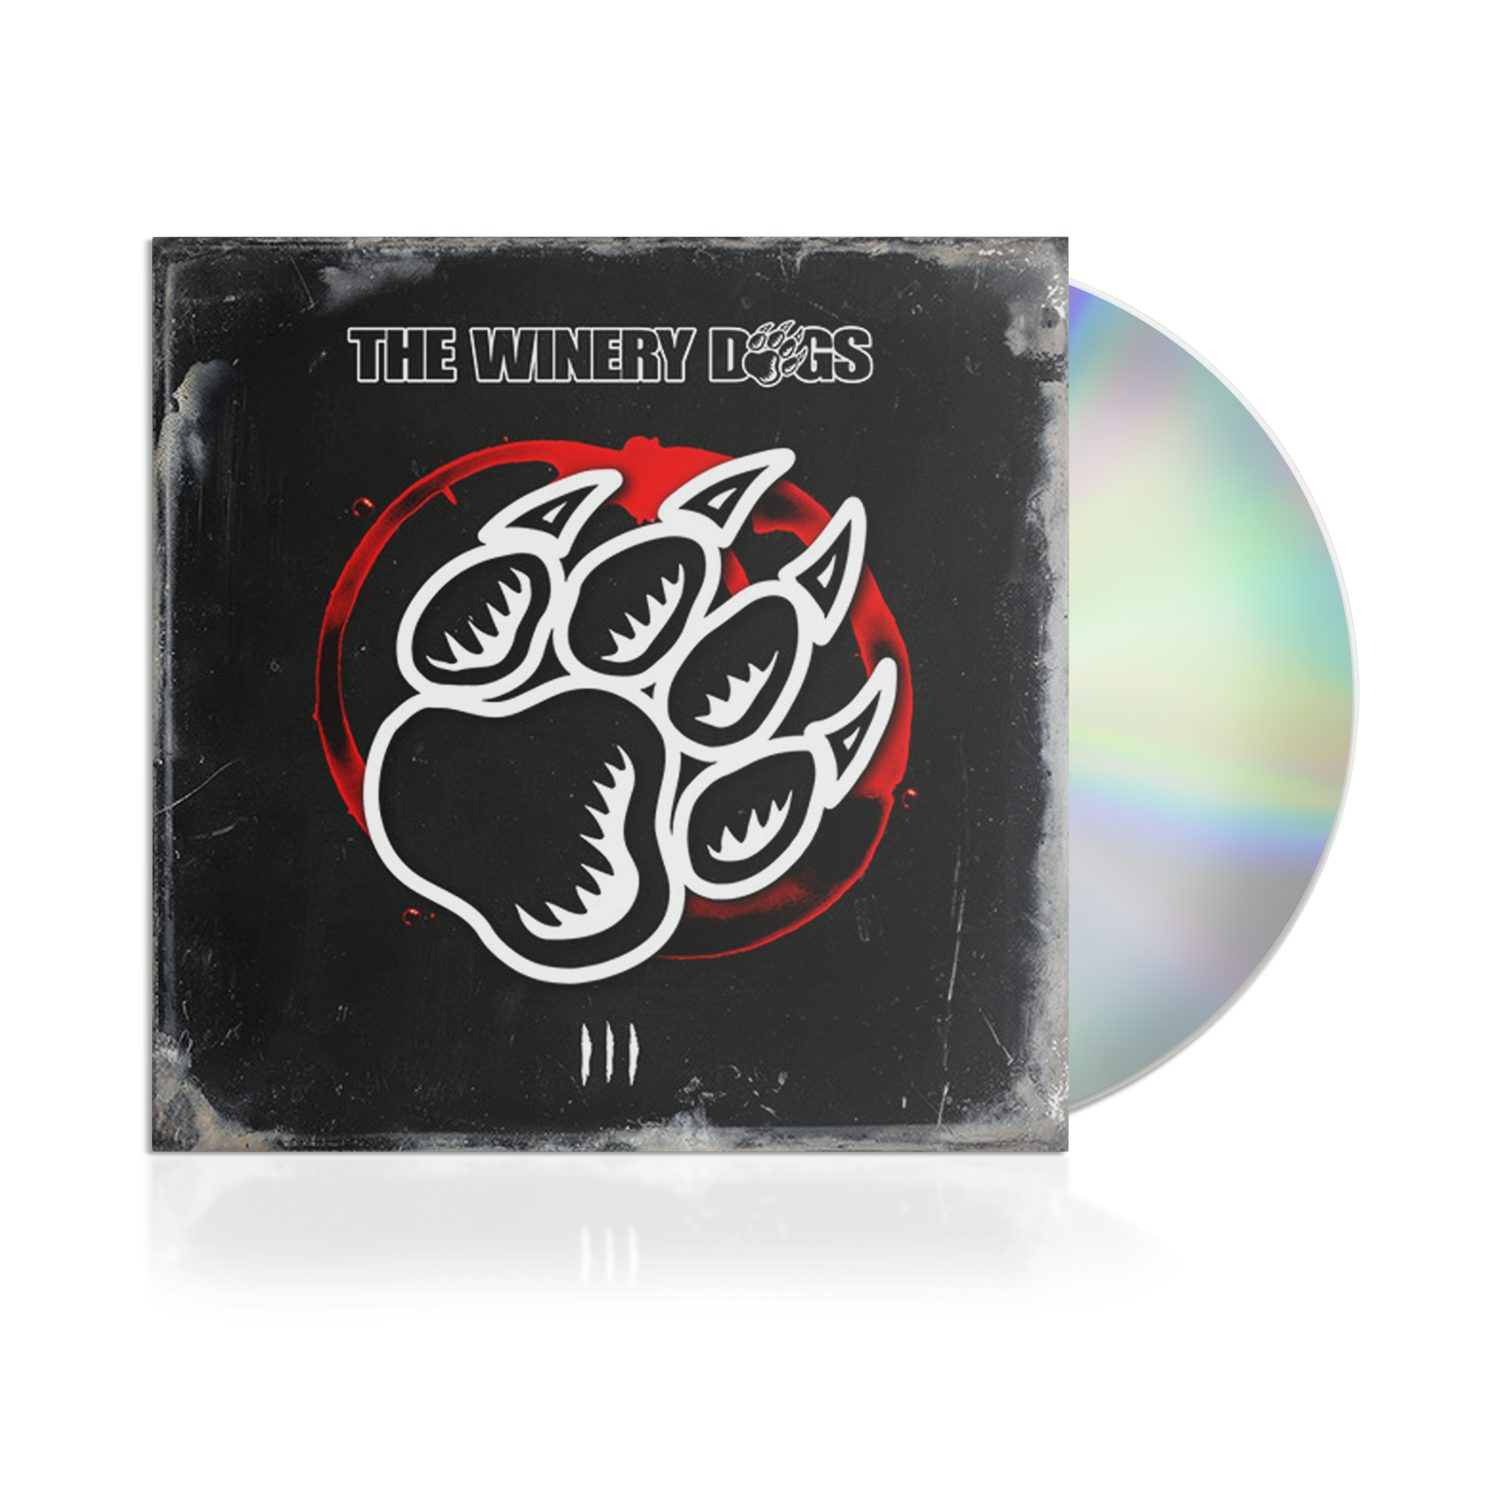 The Winery Dogs III CD $15.00